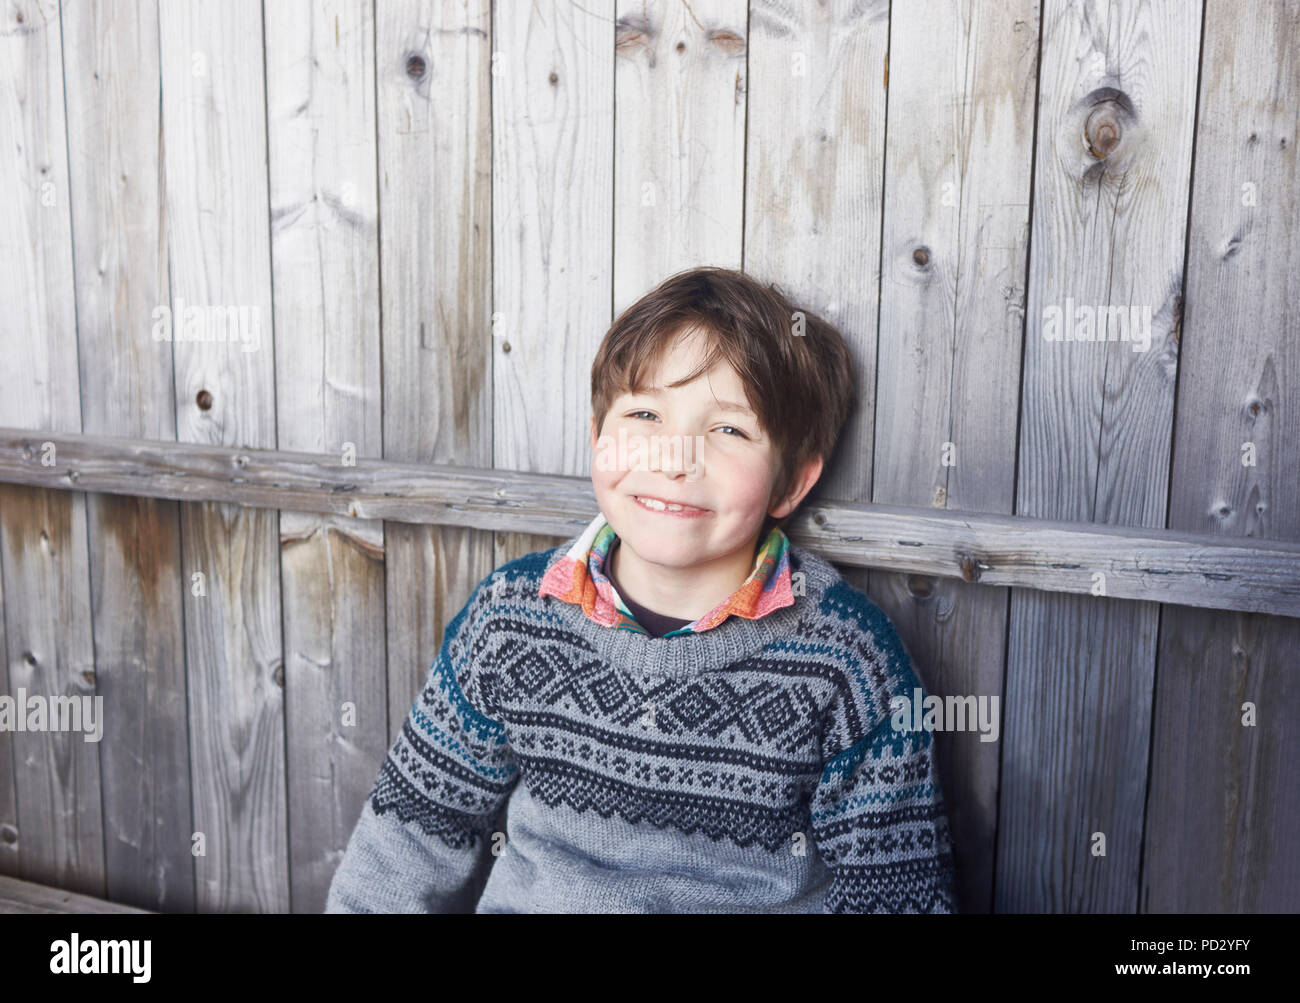 Boy outside wooden hut, portrait Stock Photo